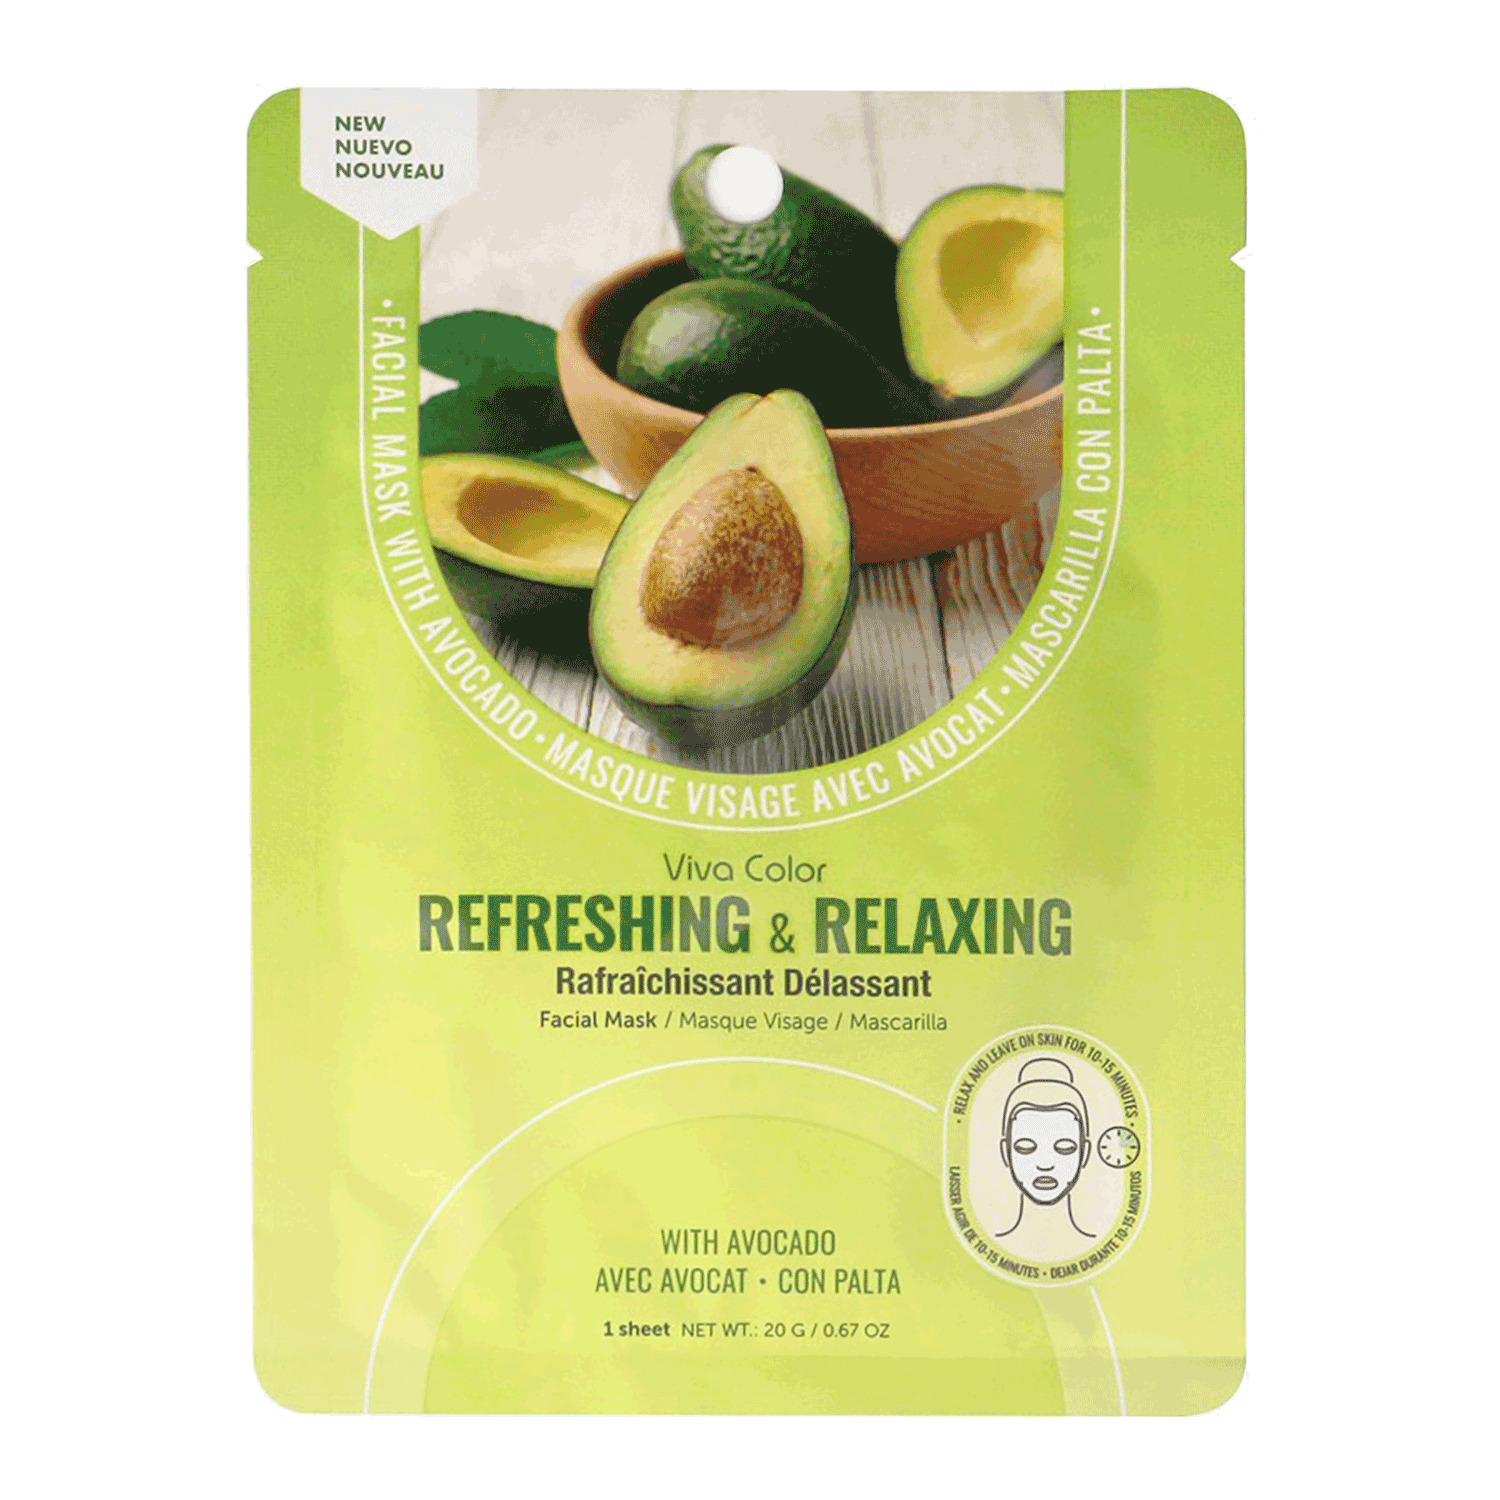 Mariposa - Refreshing & relaxing facial mask, avocado